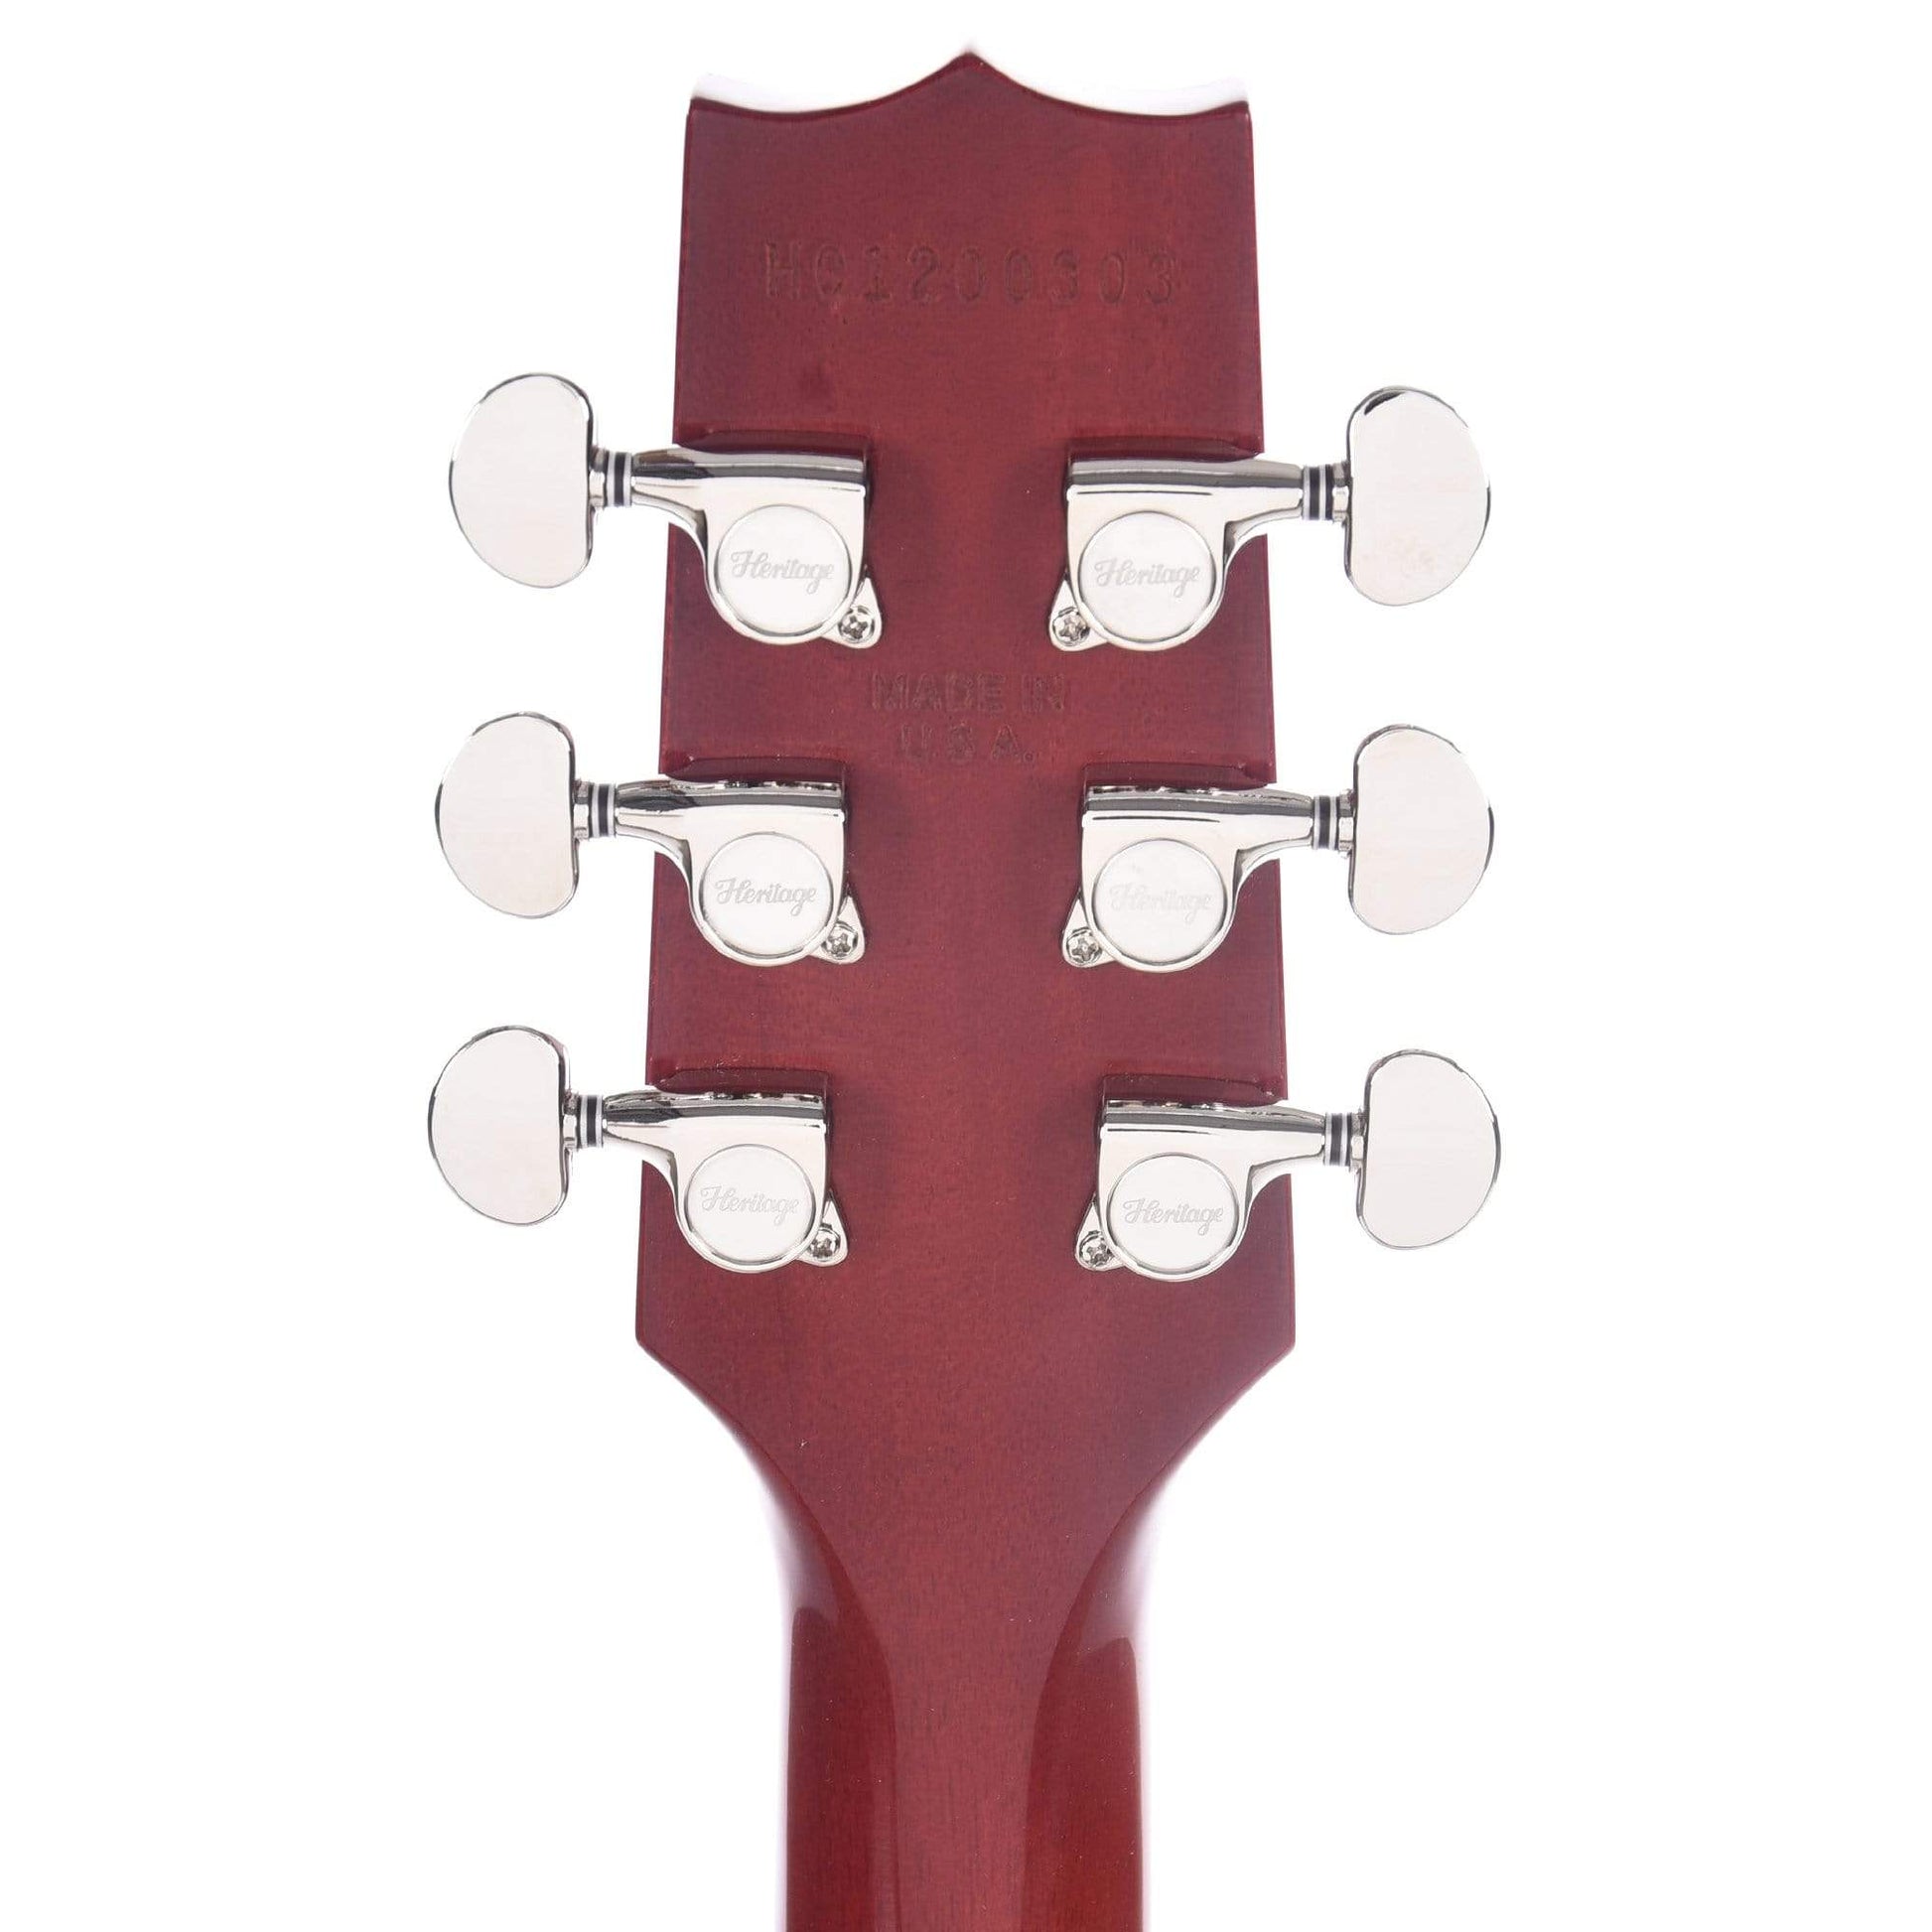 Heritage Custom Shop Core H-150 Dark Cherry Sunburst w/CME Hand-Selected Top Electric Guitars / Solid Body